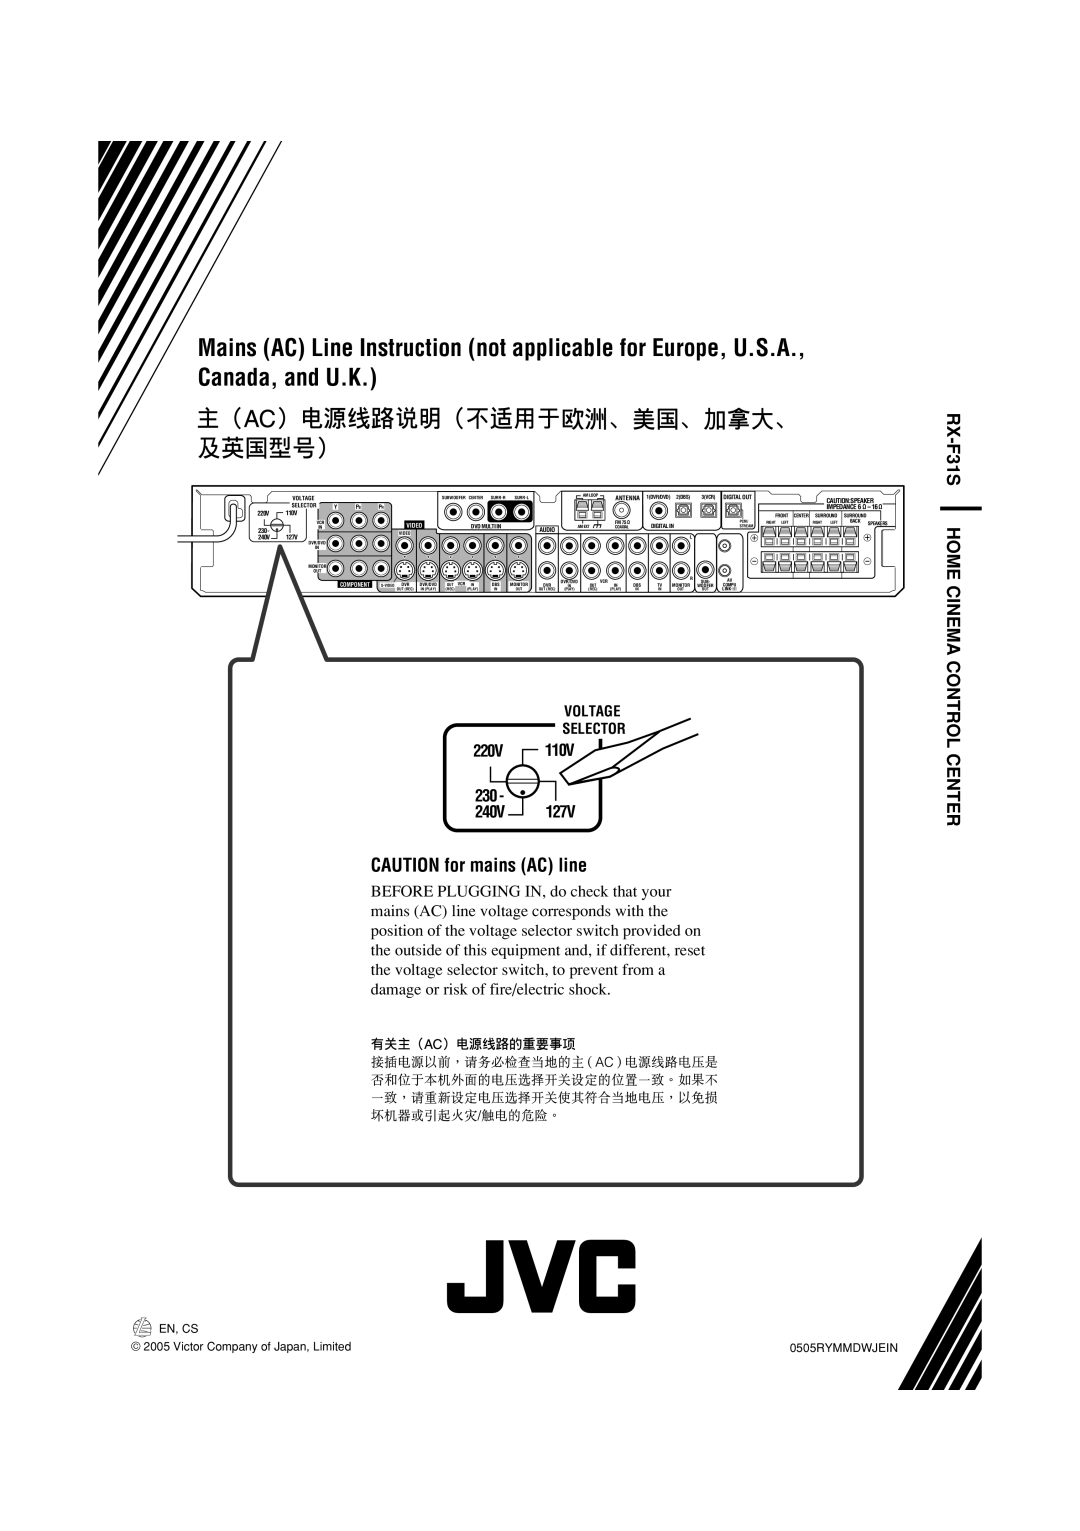 JVC manual RX-F31S HOME CINEMA CONTROL CENTER, 220V, 240V, Voltage Selector, 110V, Video, Audio, 127V 